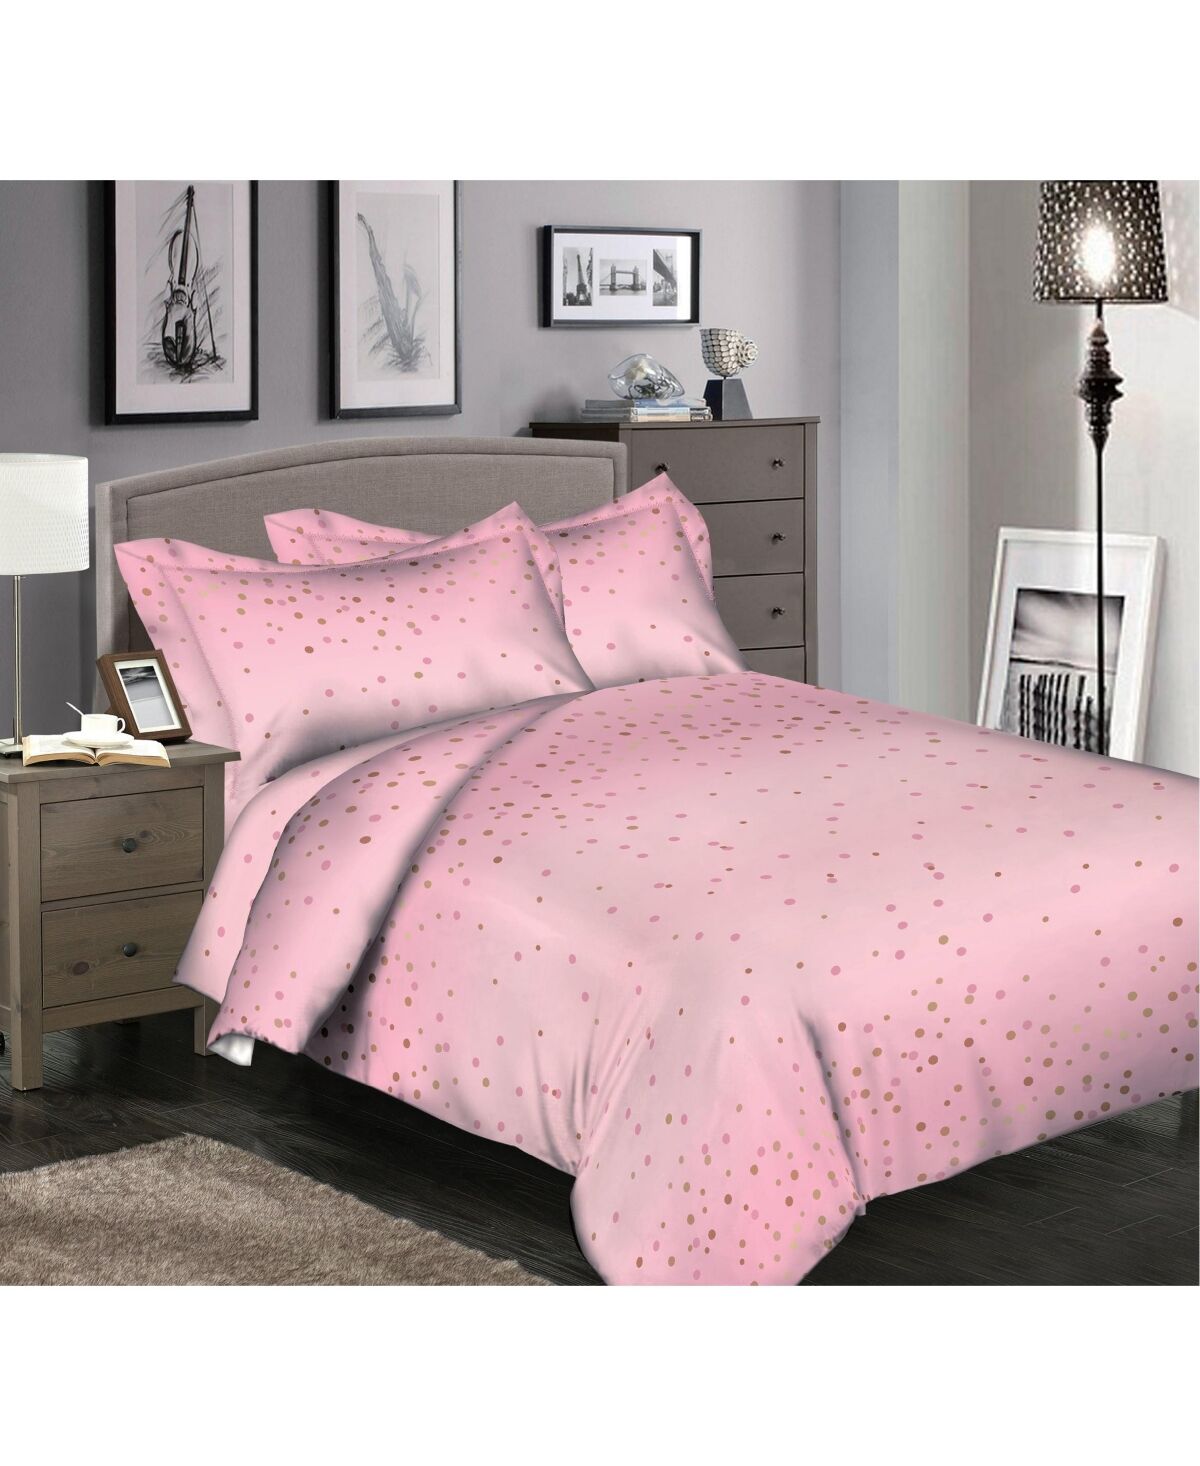 Circles Home 180TC 8 pc Linen Duvet Set- Twin - Joyful confetti - pink